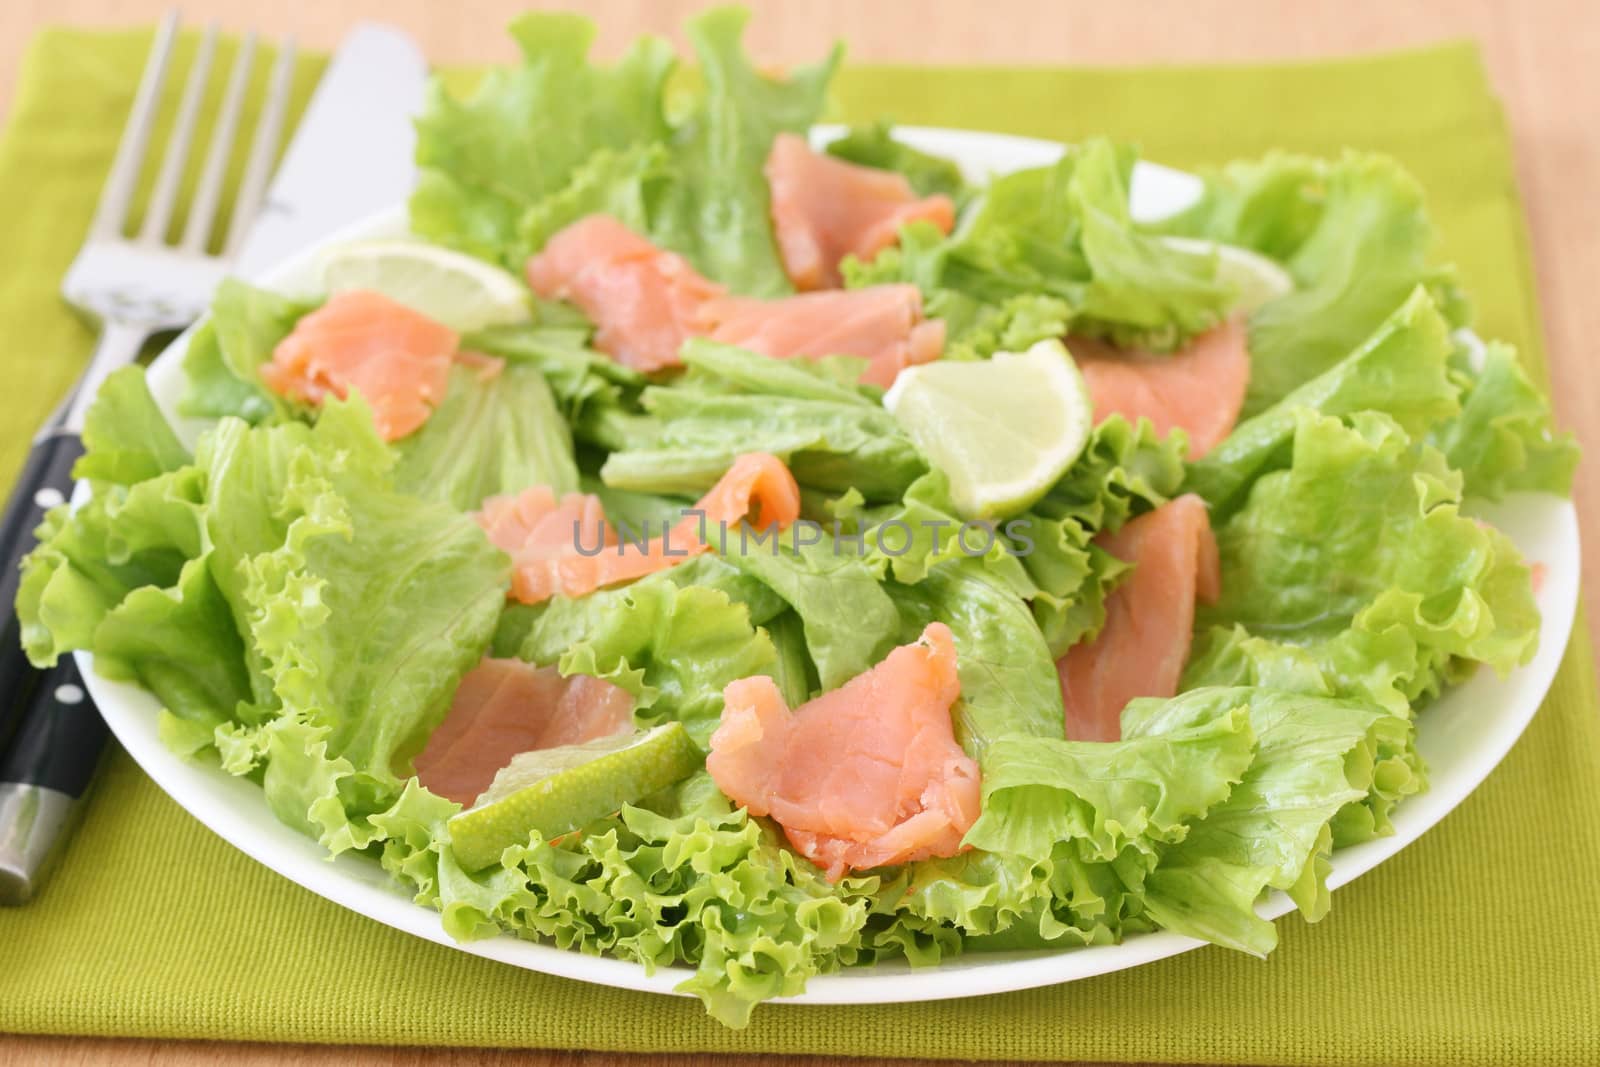 salad with salted salmon